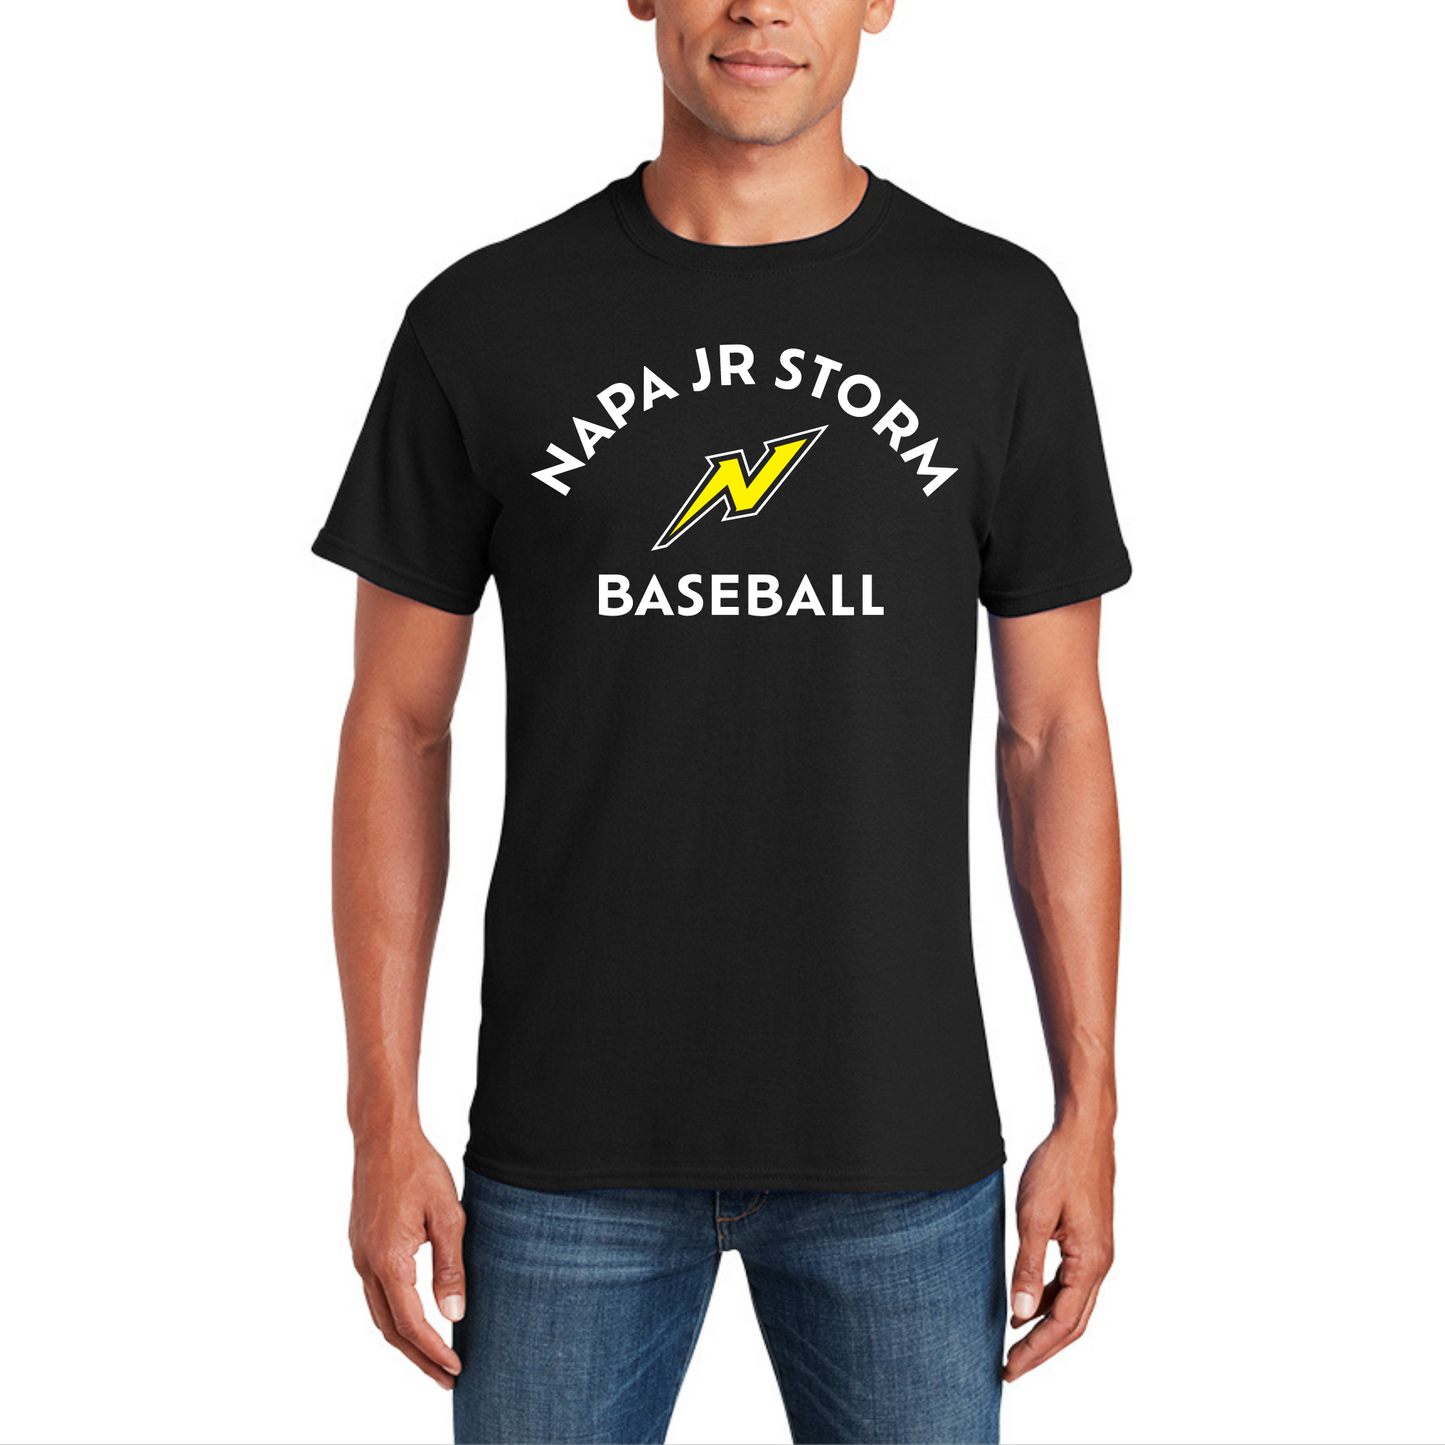 Napa Jr. Storm Baseball Unisex Short Sleeve Tee